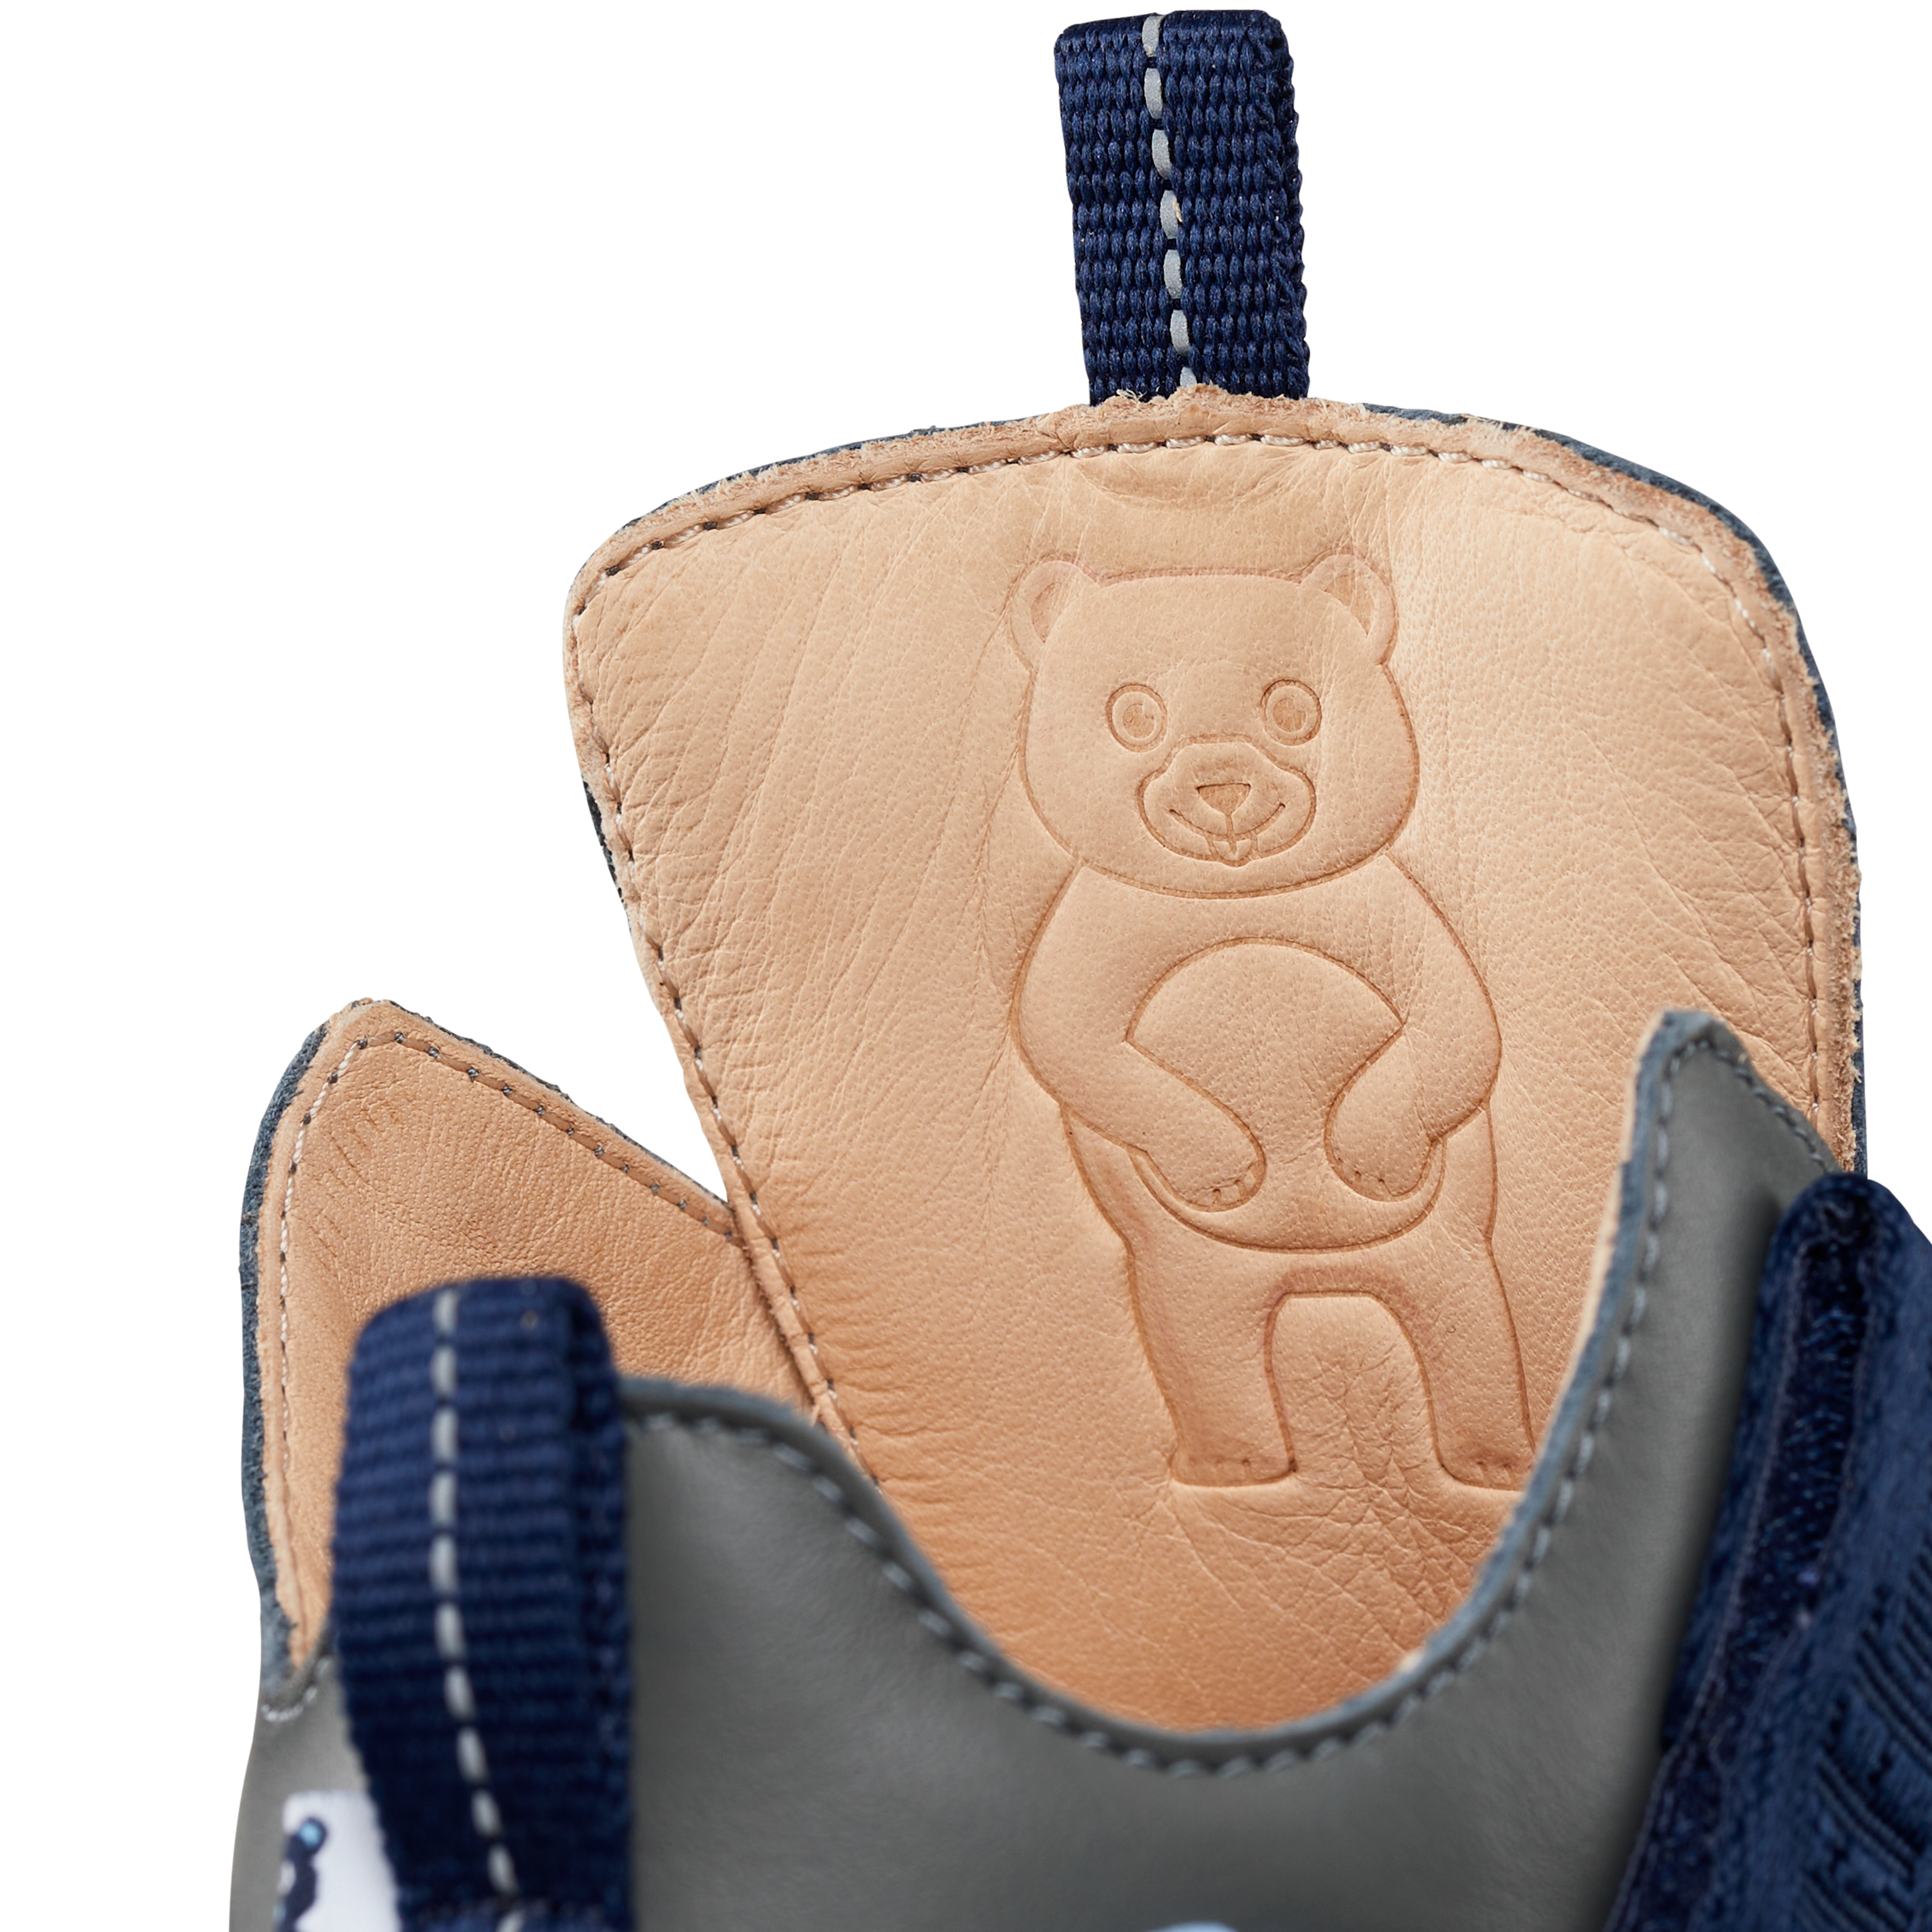 Affenzahn Leather Buddy barfods overgangssko til børn i farven bear / darker blue, detalje